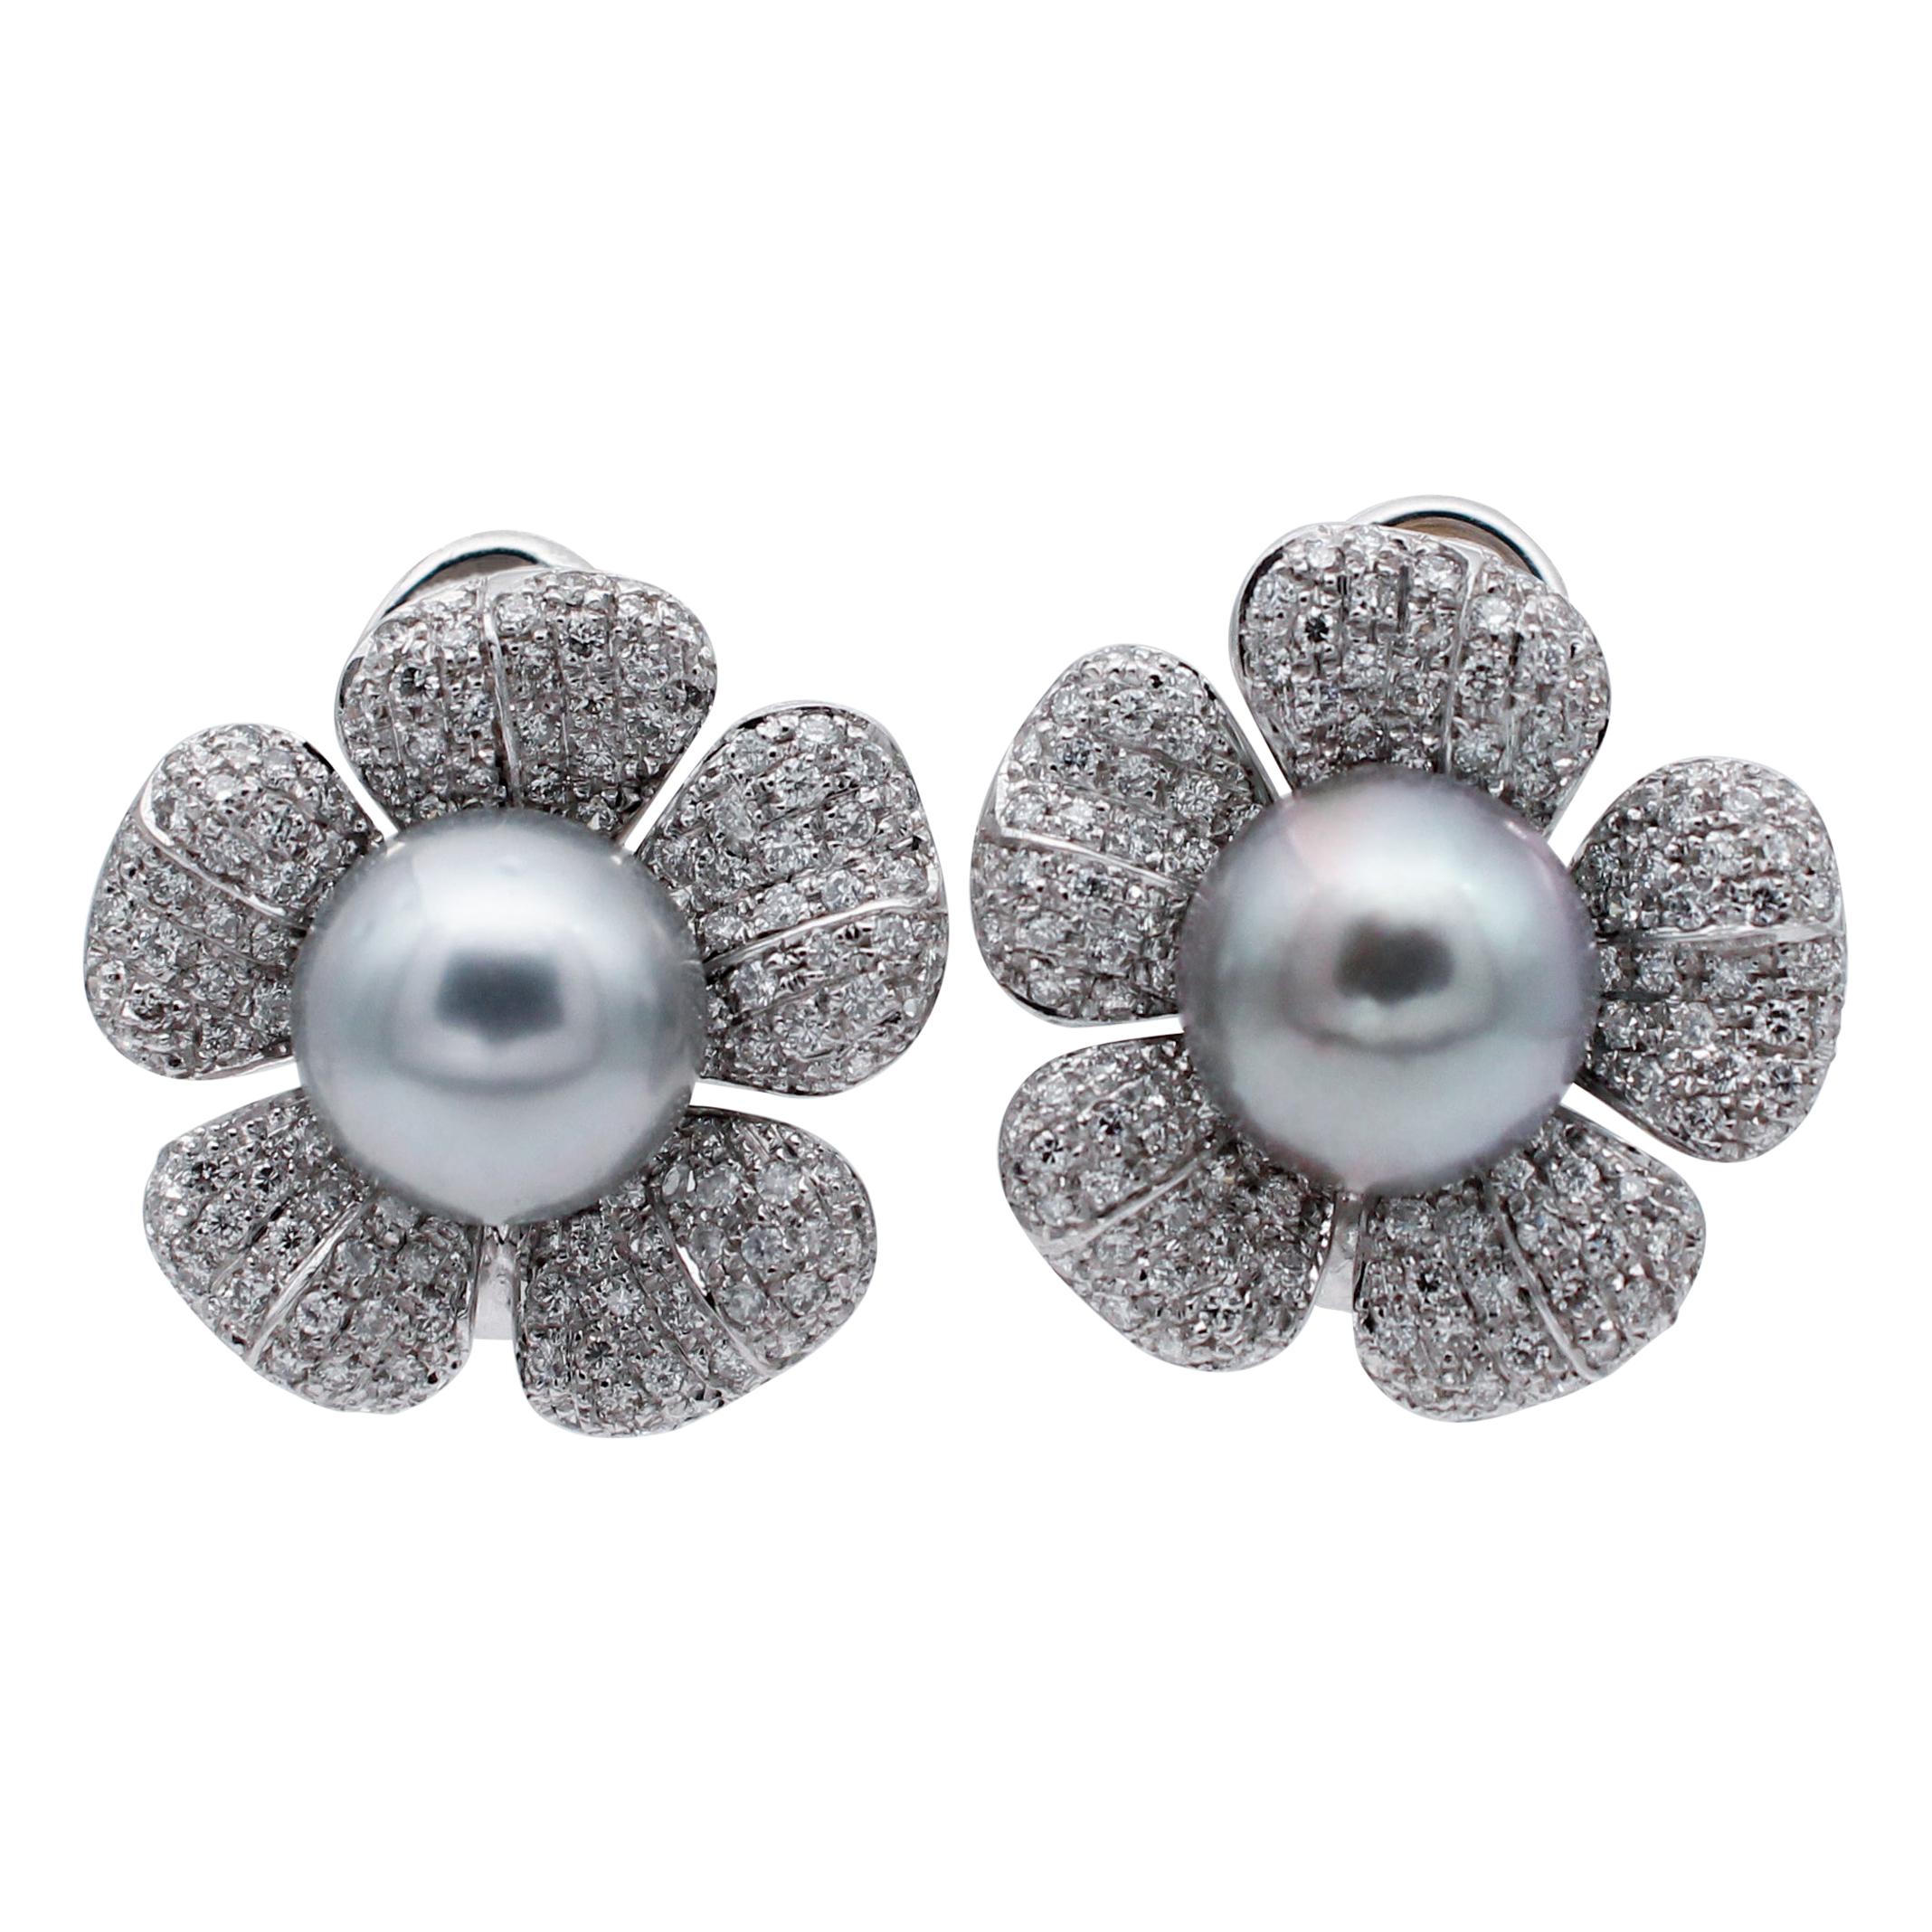 Diamonds, Grey Pearls, 18 Karat White Gold Flower Earrings